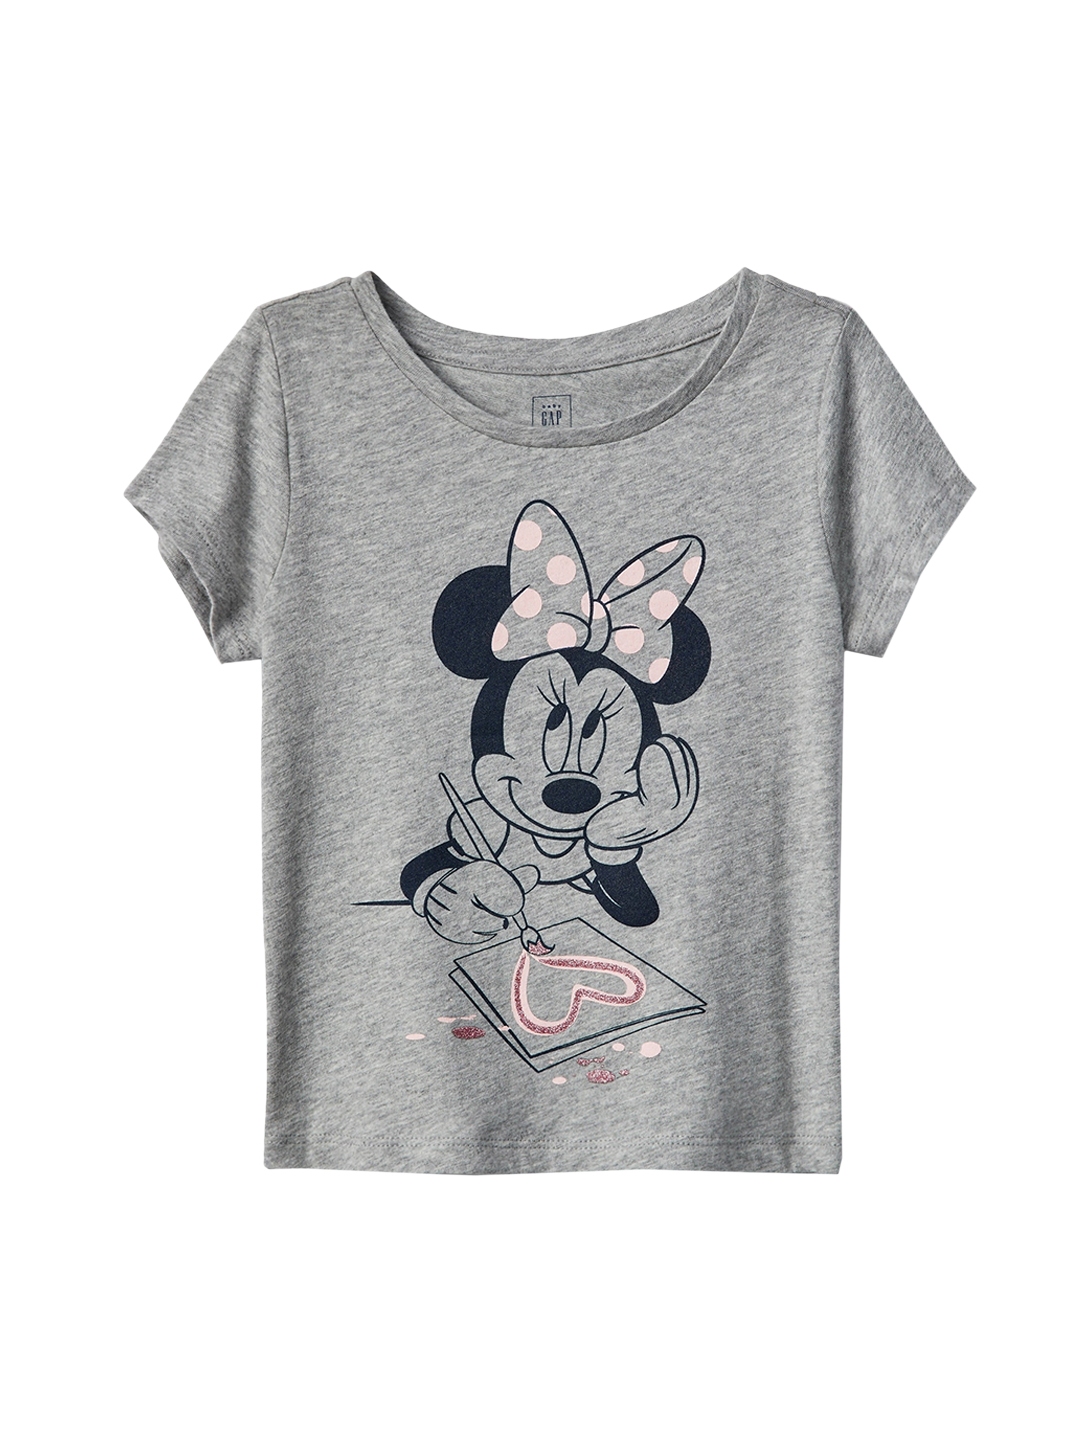 minnie mouse t shirt girls